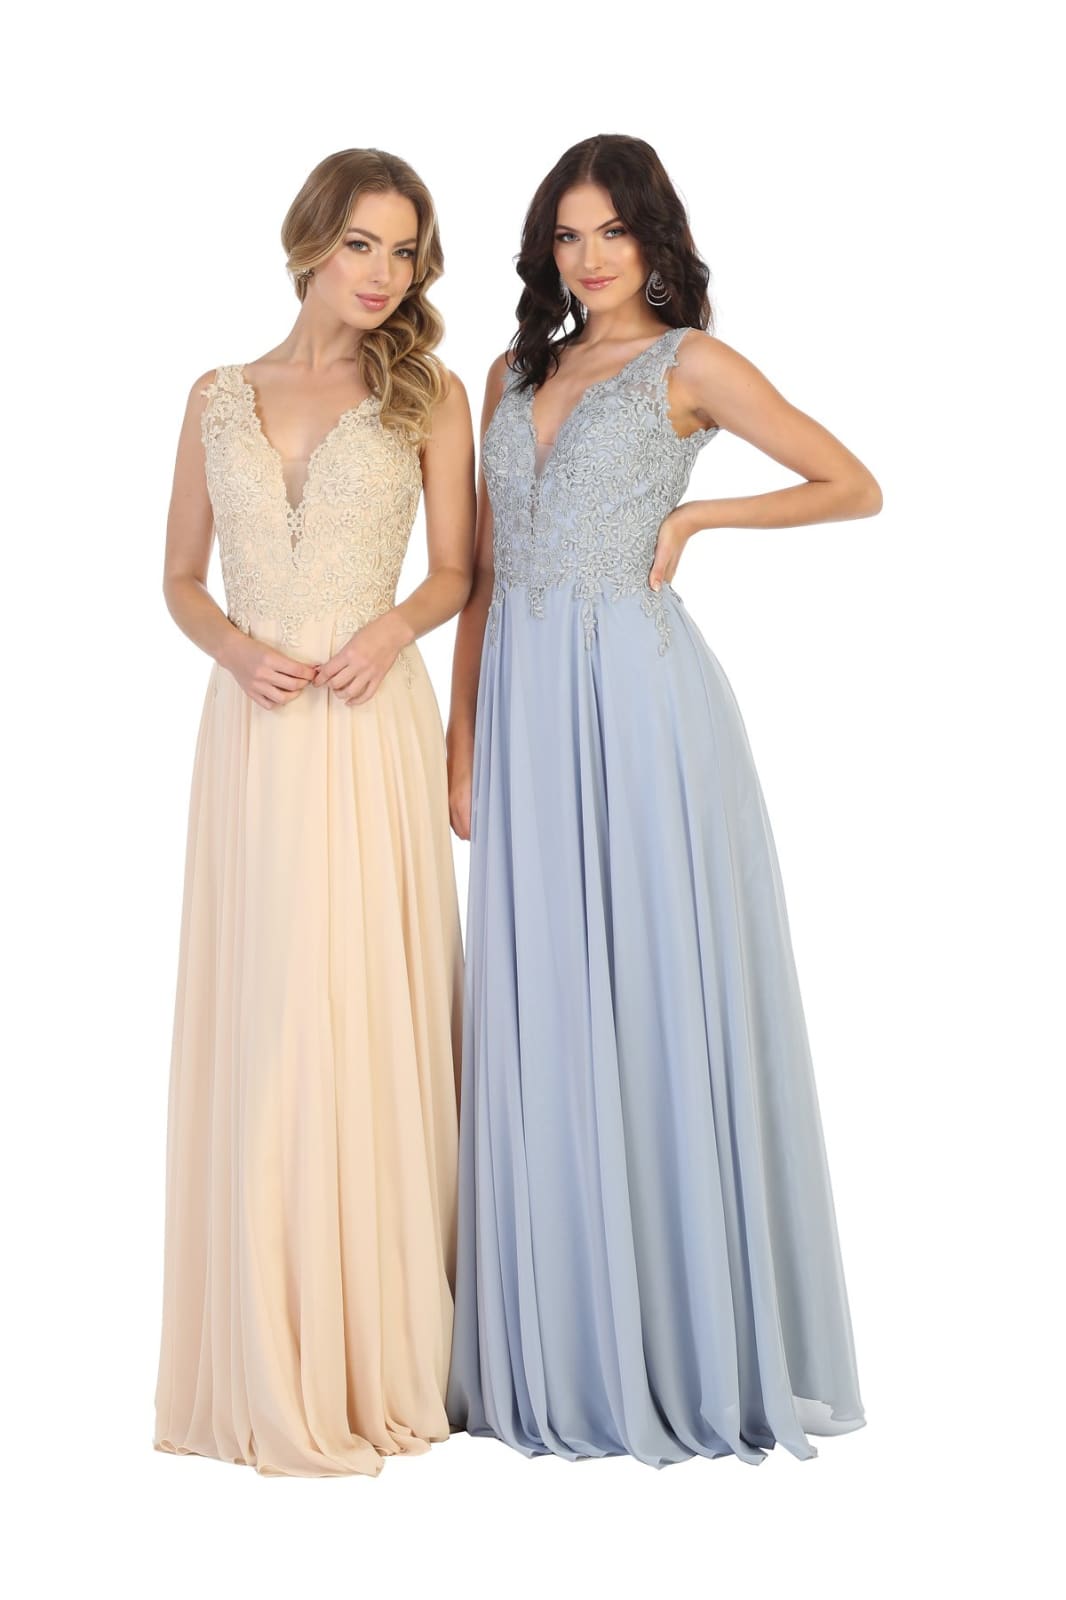 Formal Bridesmaid Dress LA1754 - Dusty Blue - Dress LA Merchandise